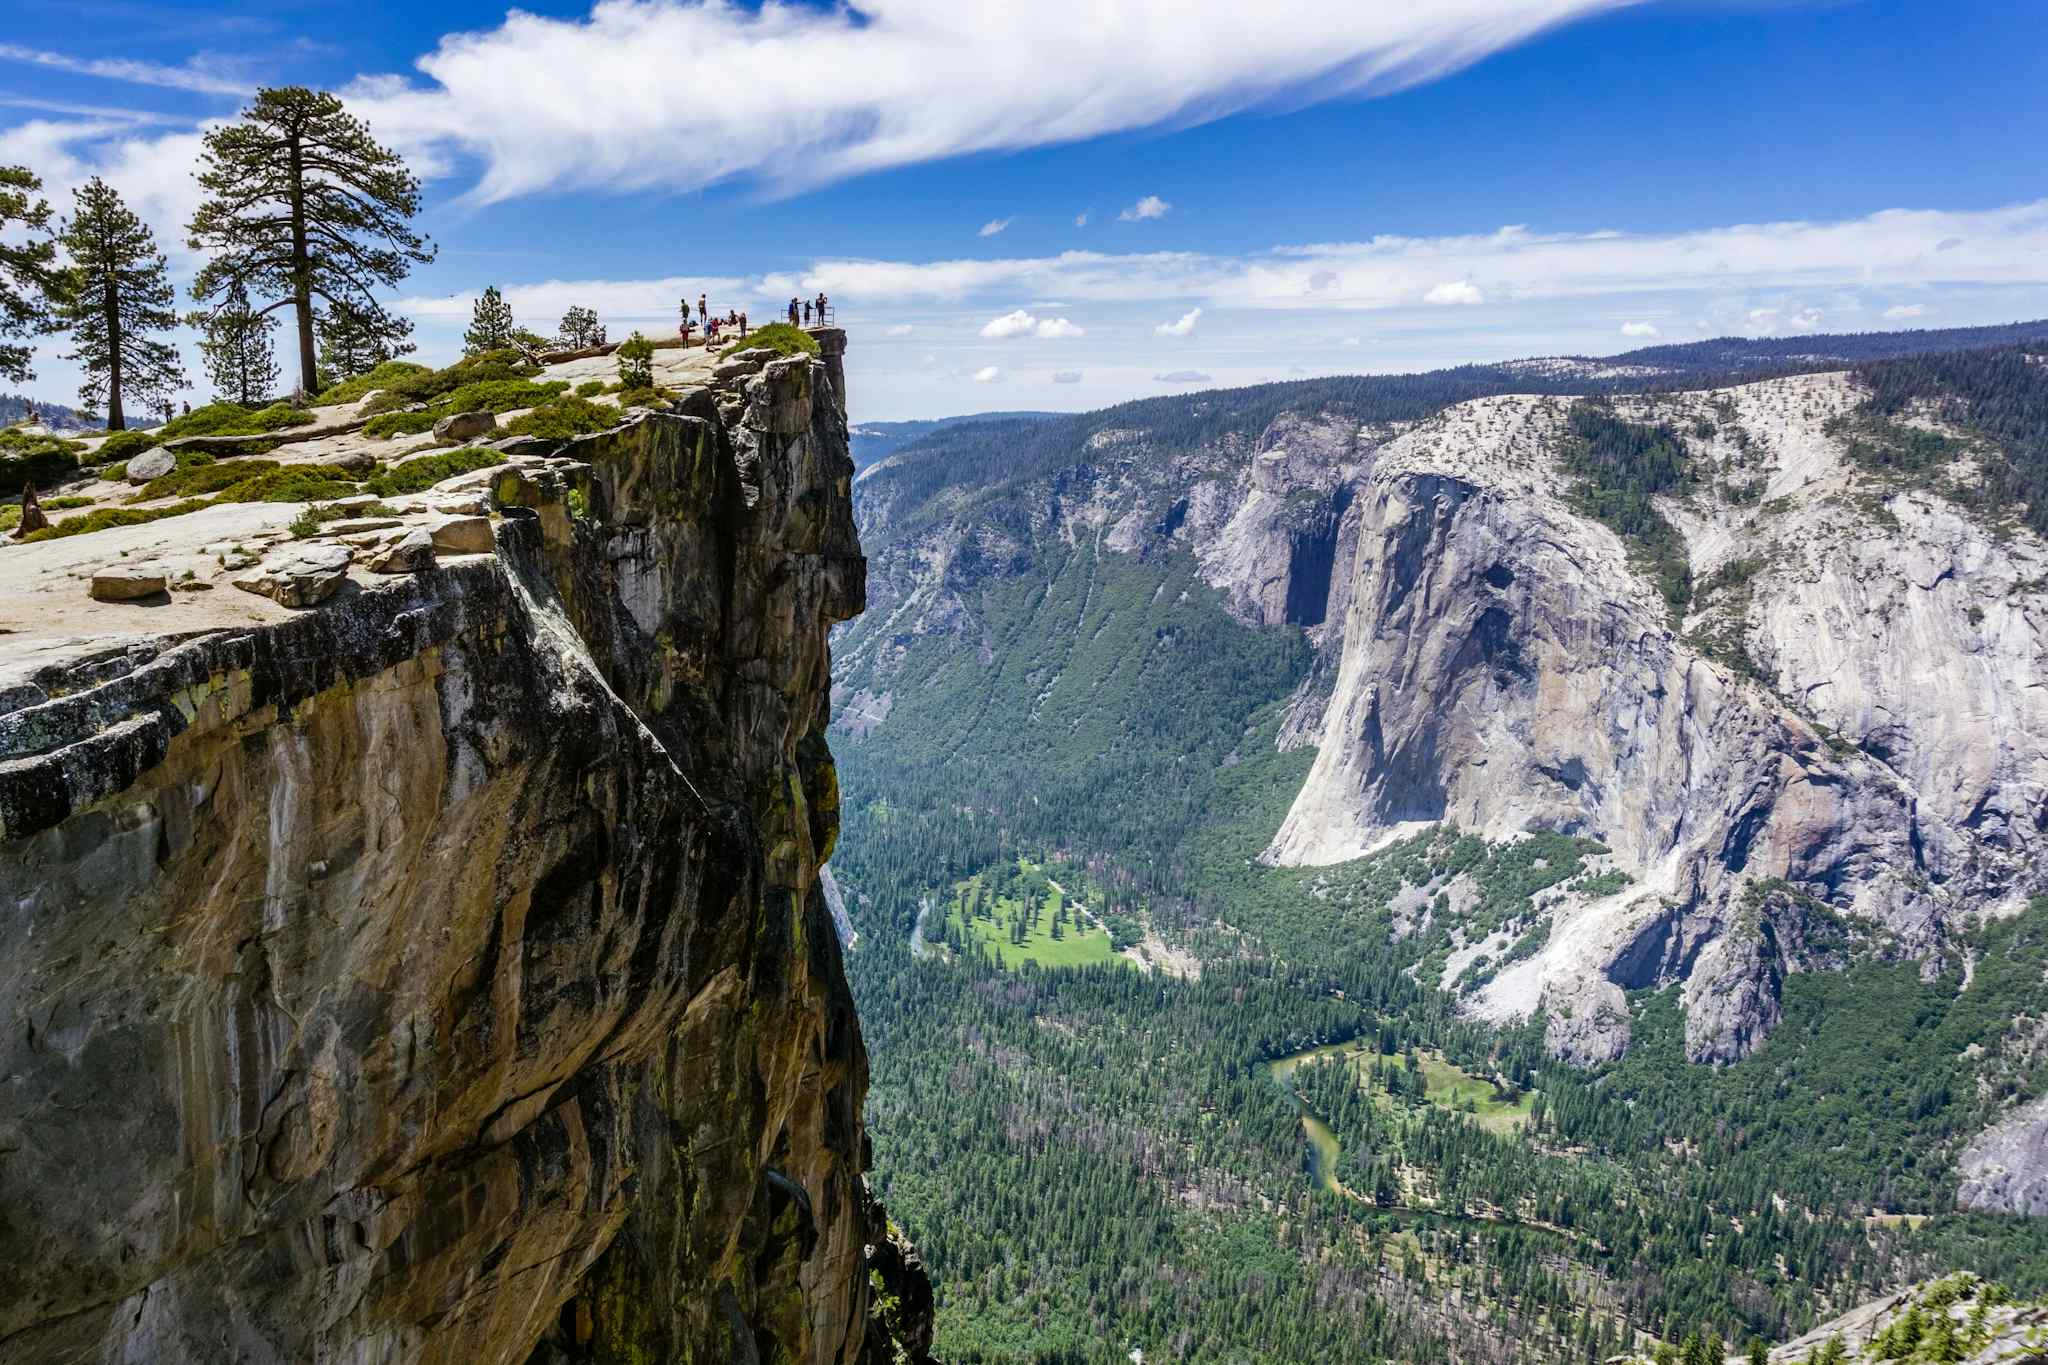 Yosemite lookout point over El Capitan, USA
Shutterstock: 1458161771